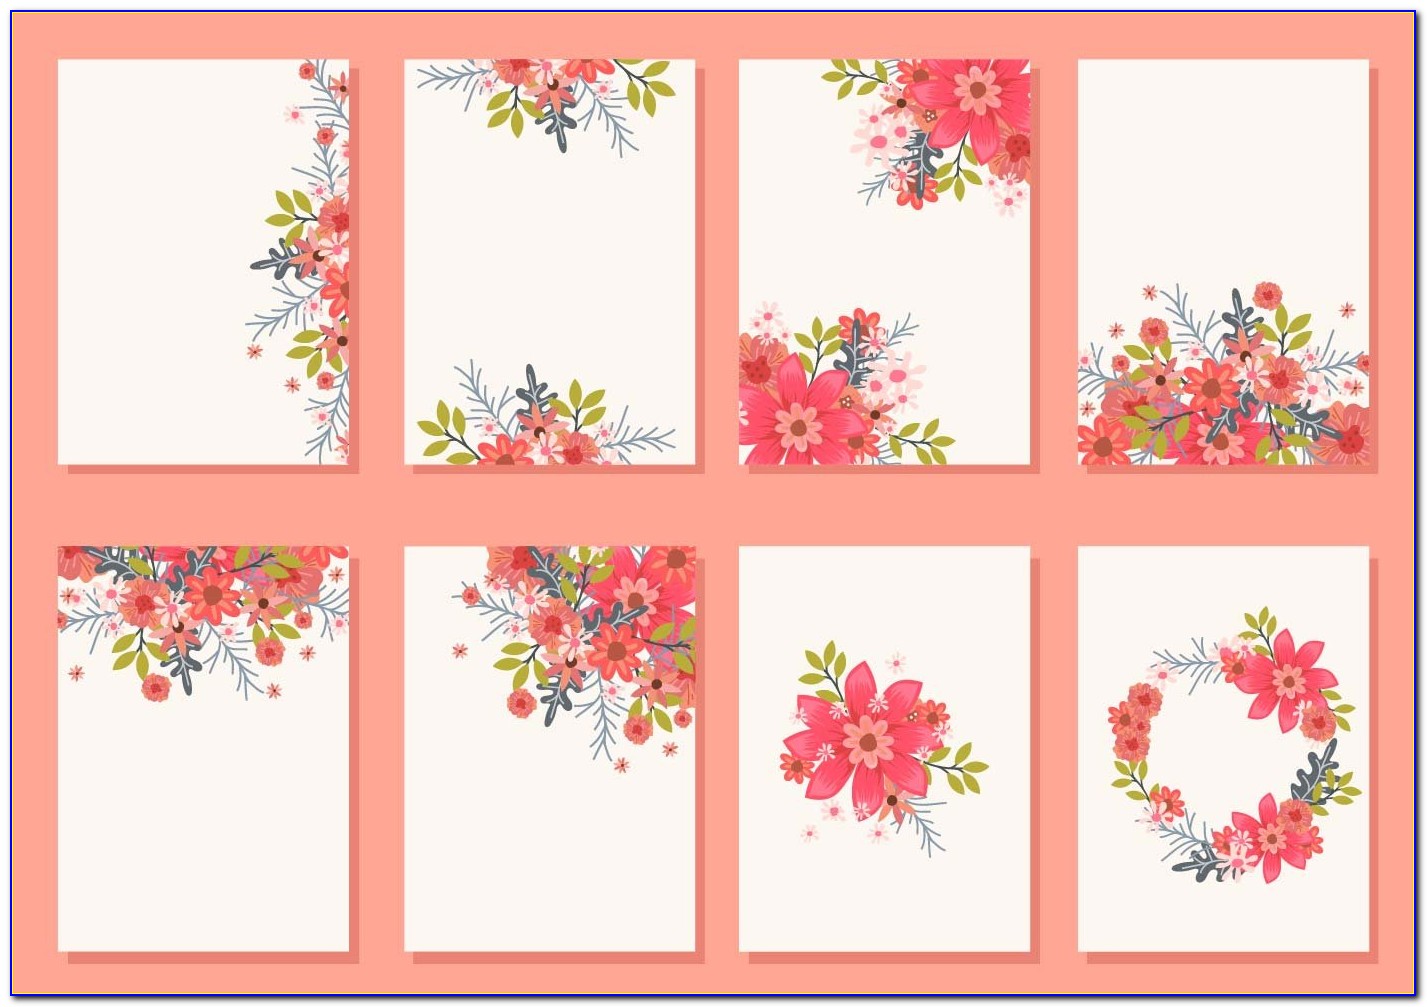 Floral Invitation Card Background